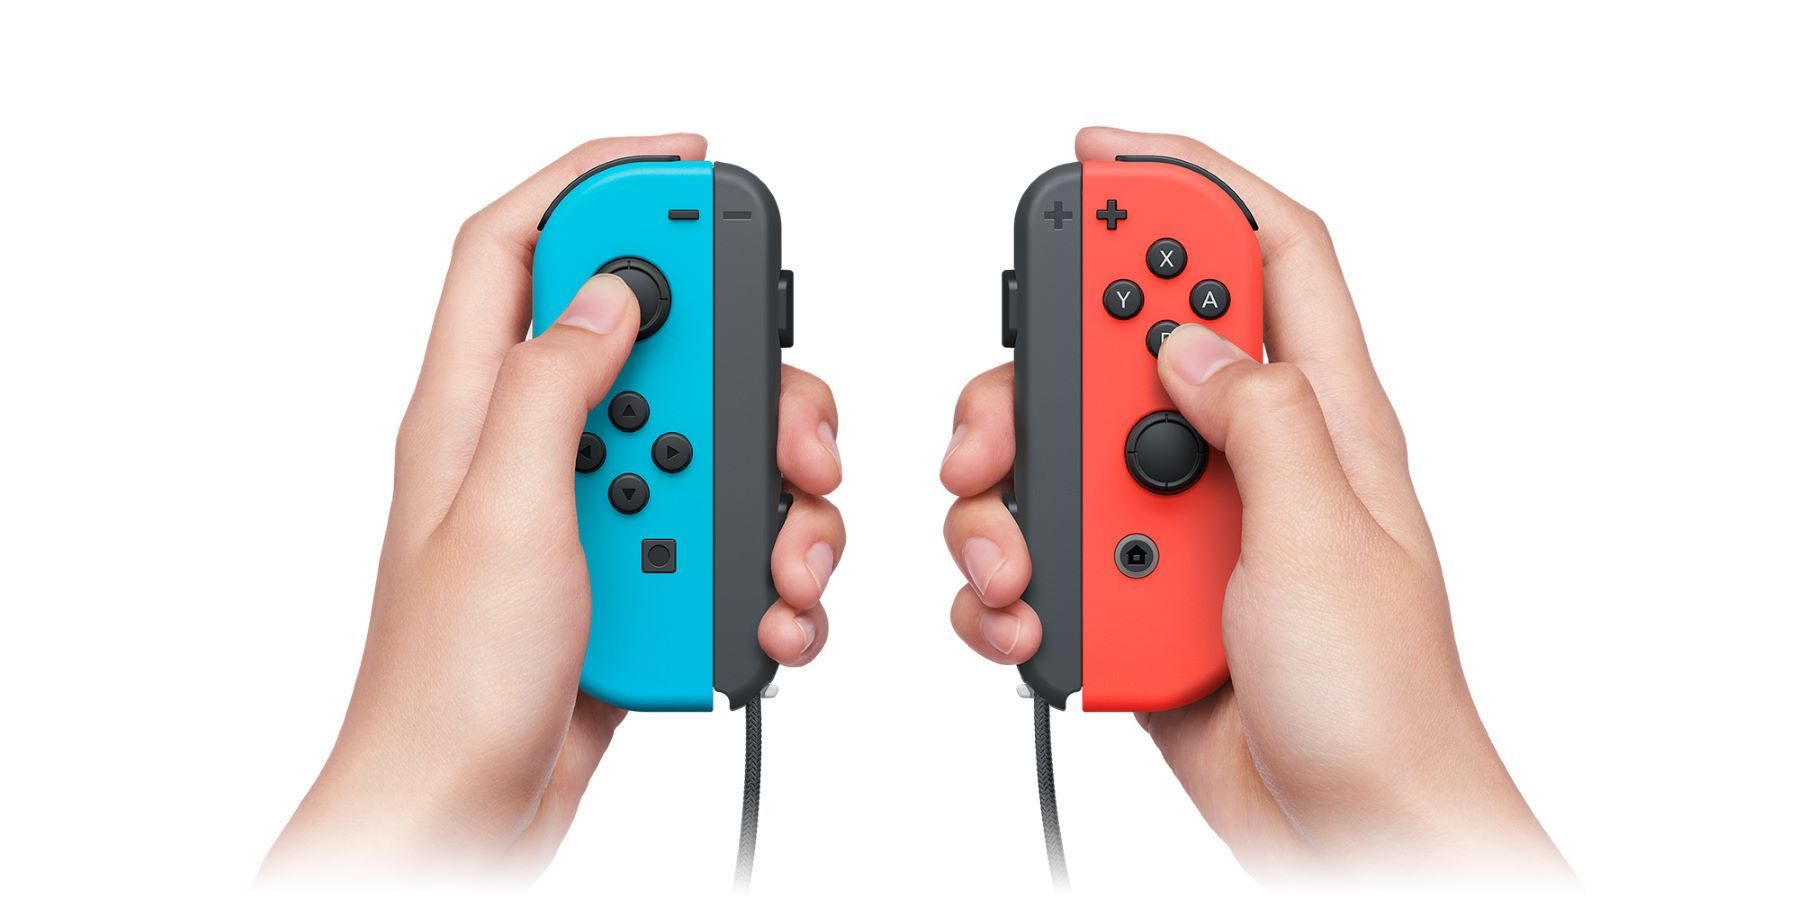 Nintendo Switch Upgrade Kit Promises An End to Joy-Con Drift